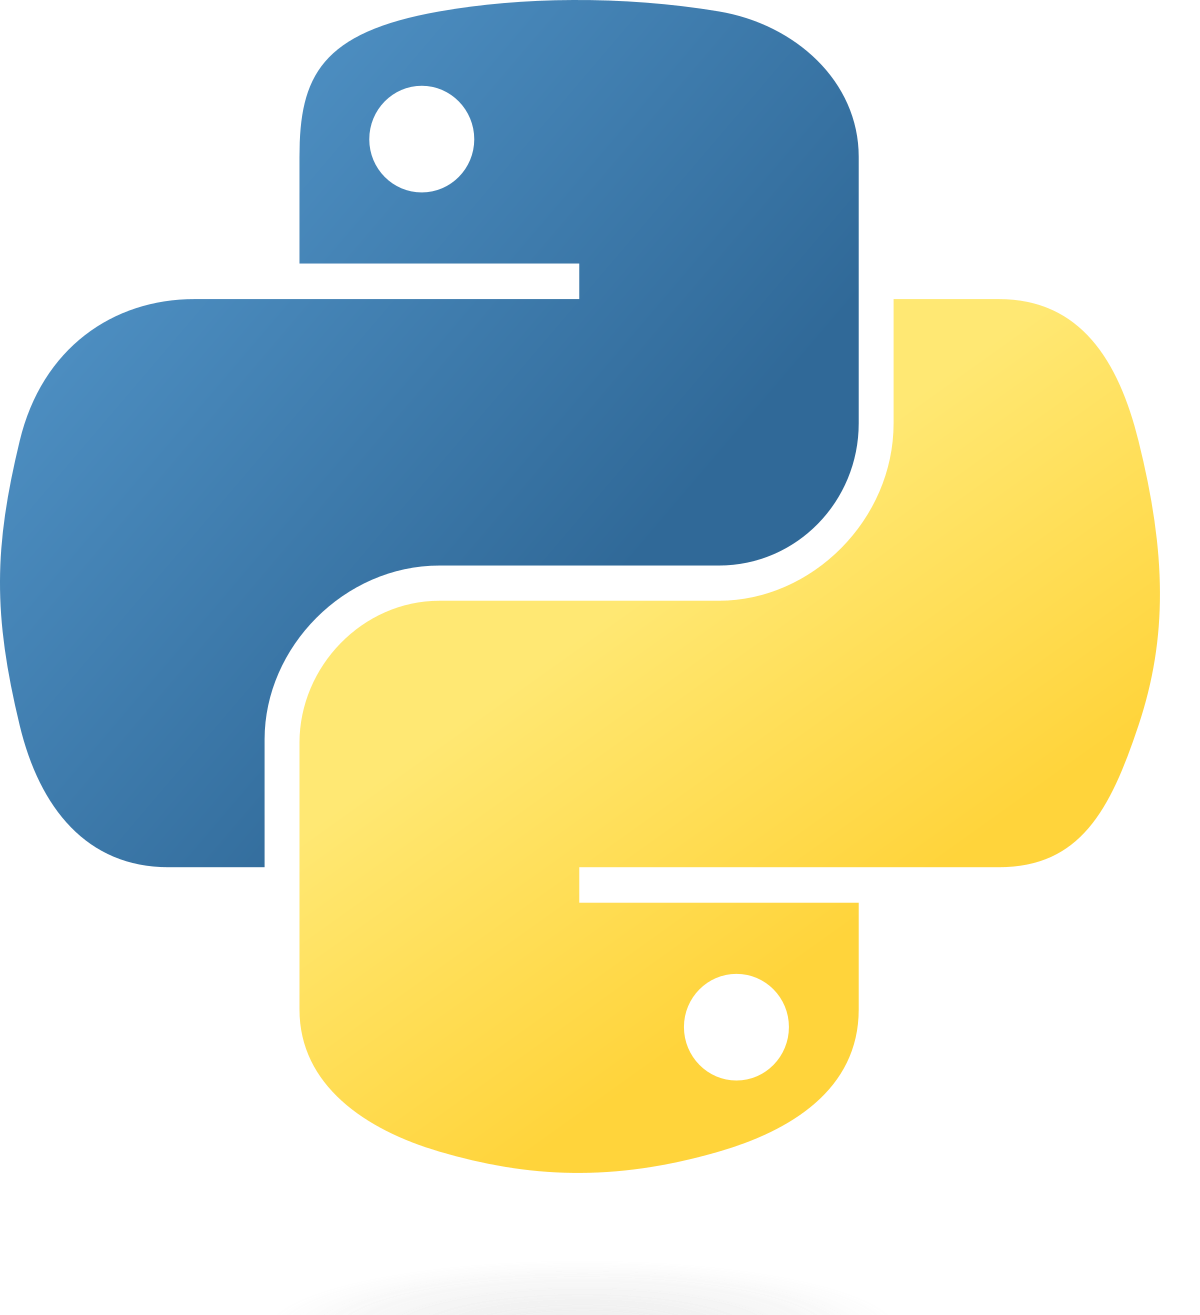 Python Developer Extension Pack